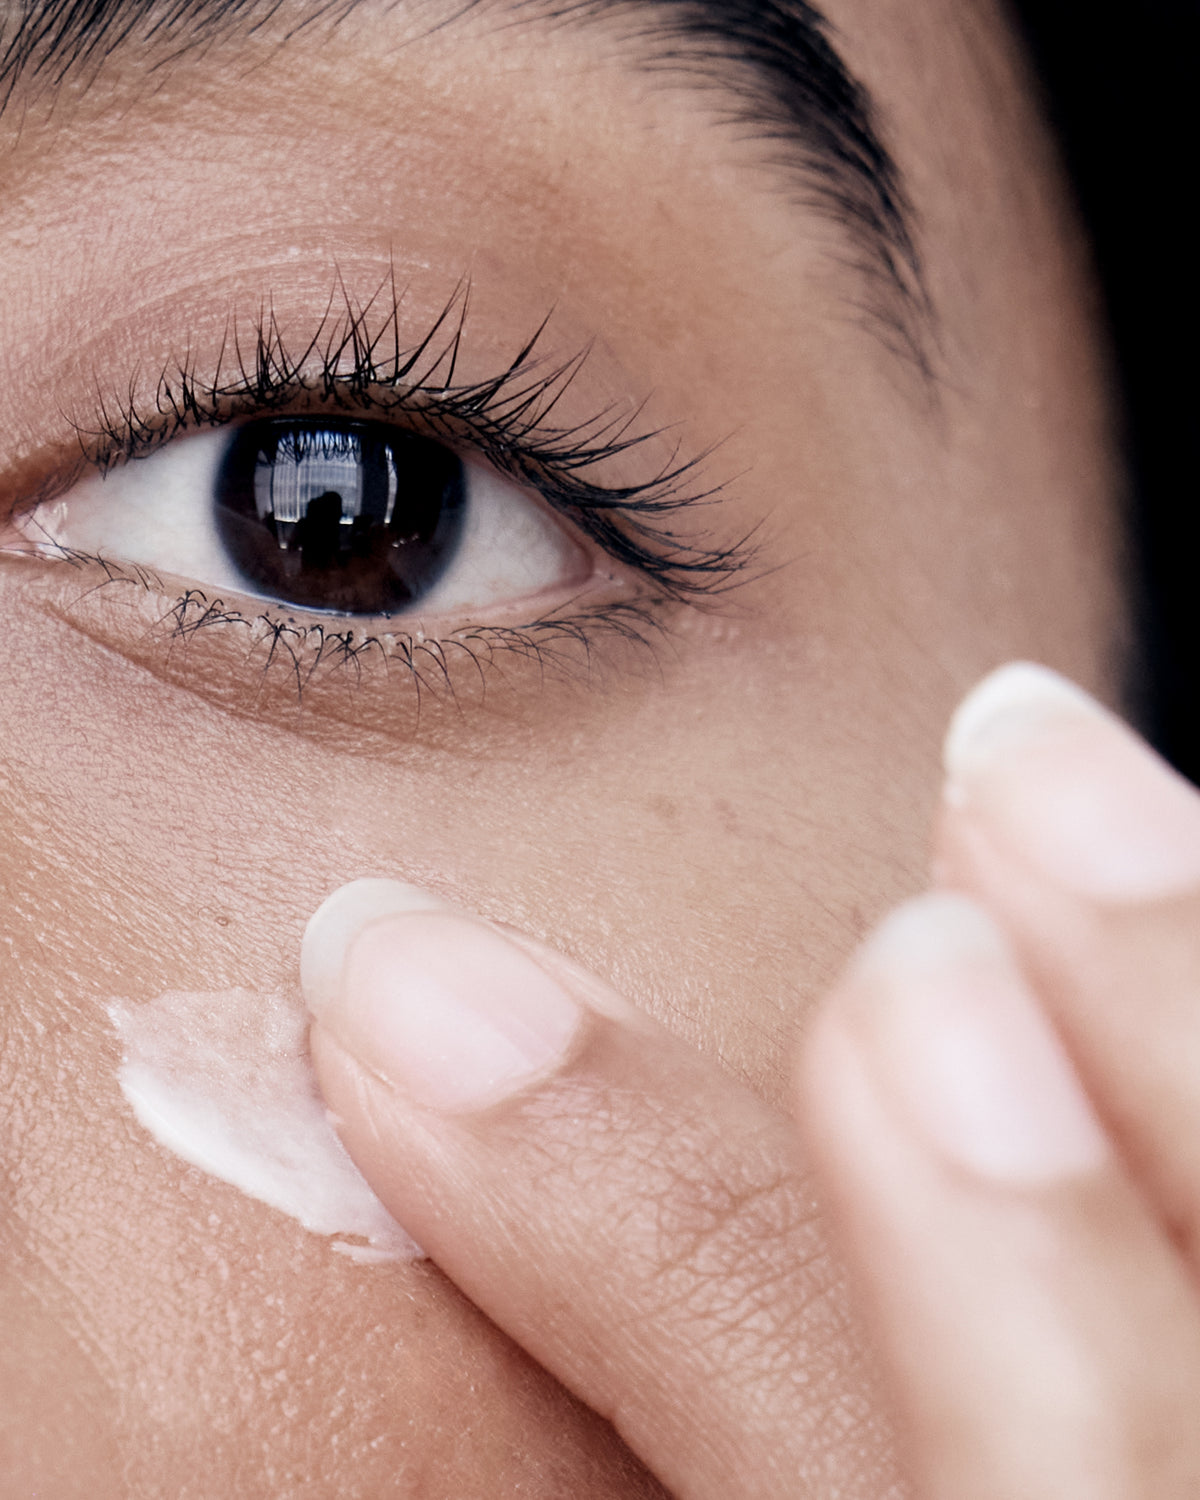 Emma Lewisham | Skin Reset Eye Cream